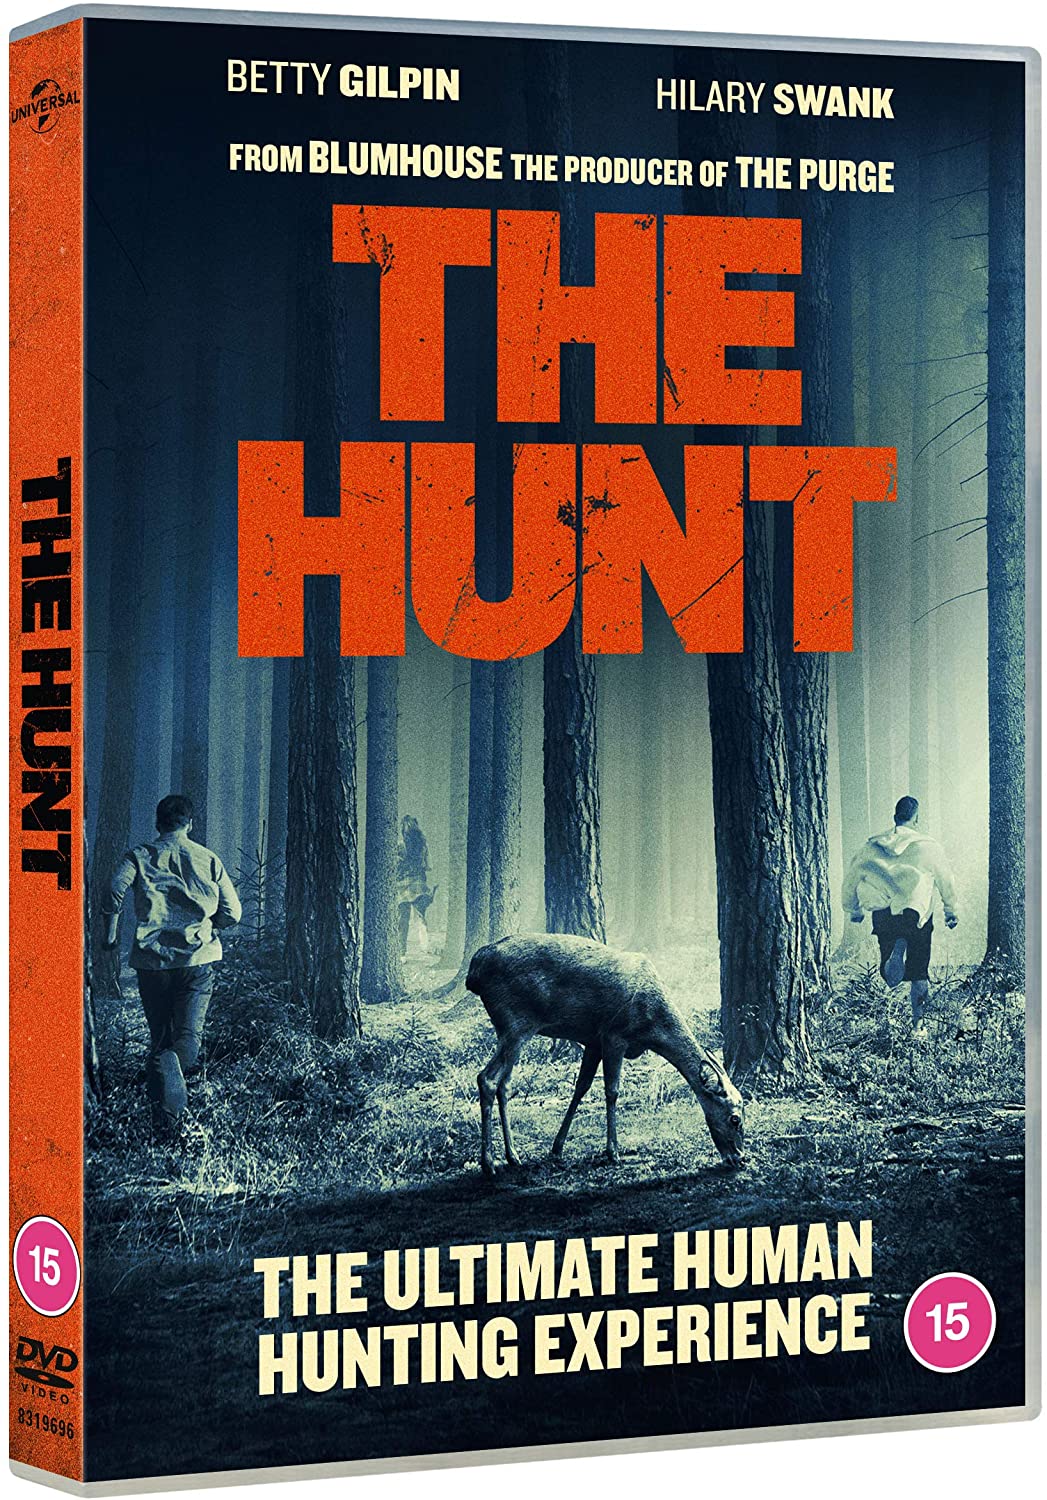 The Hunt [2020] (DVD)